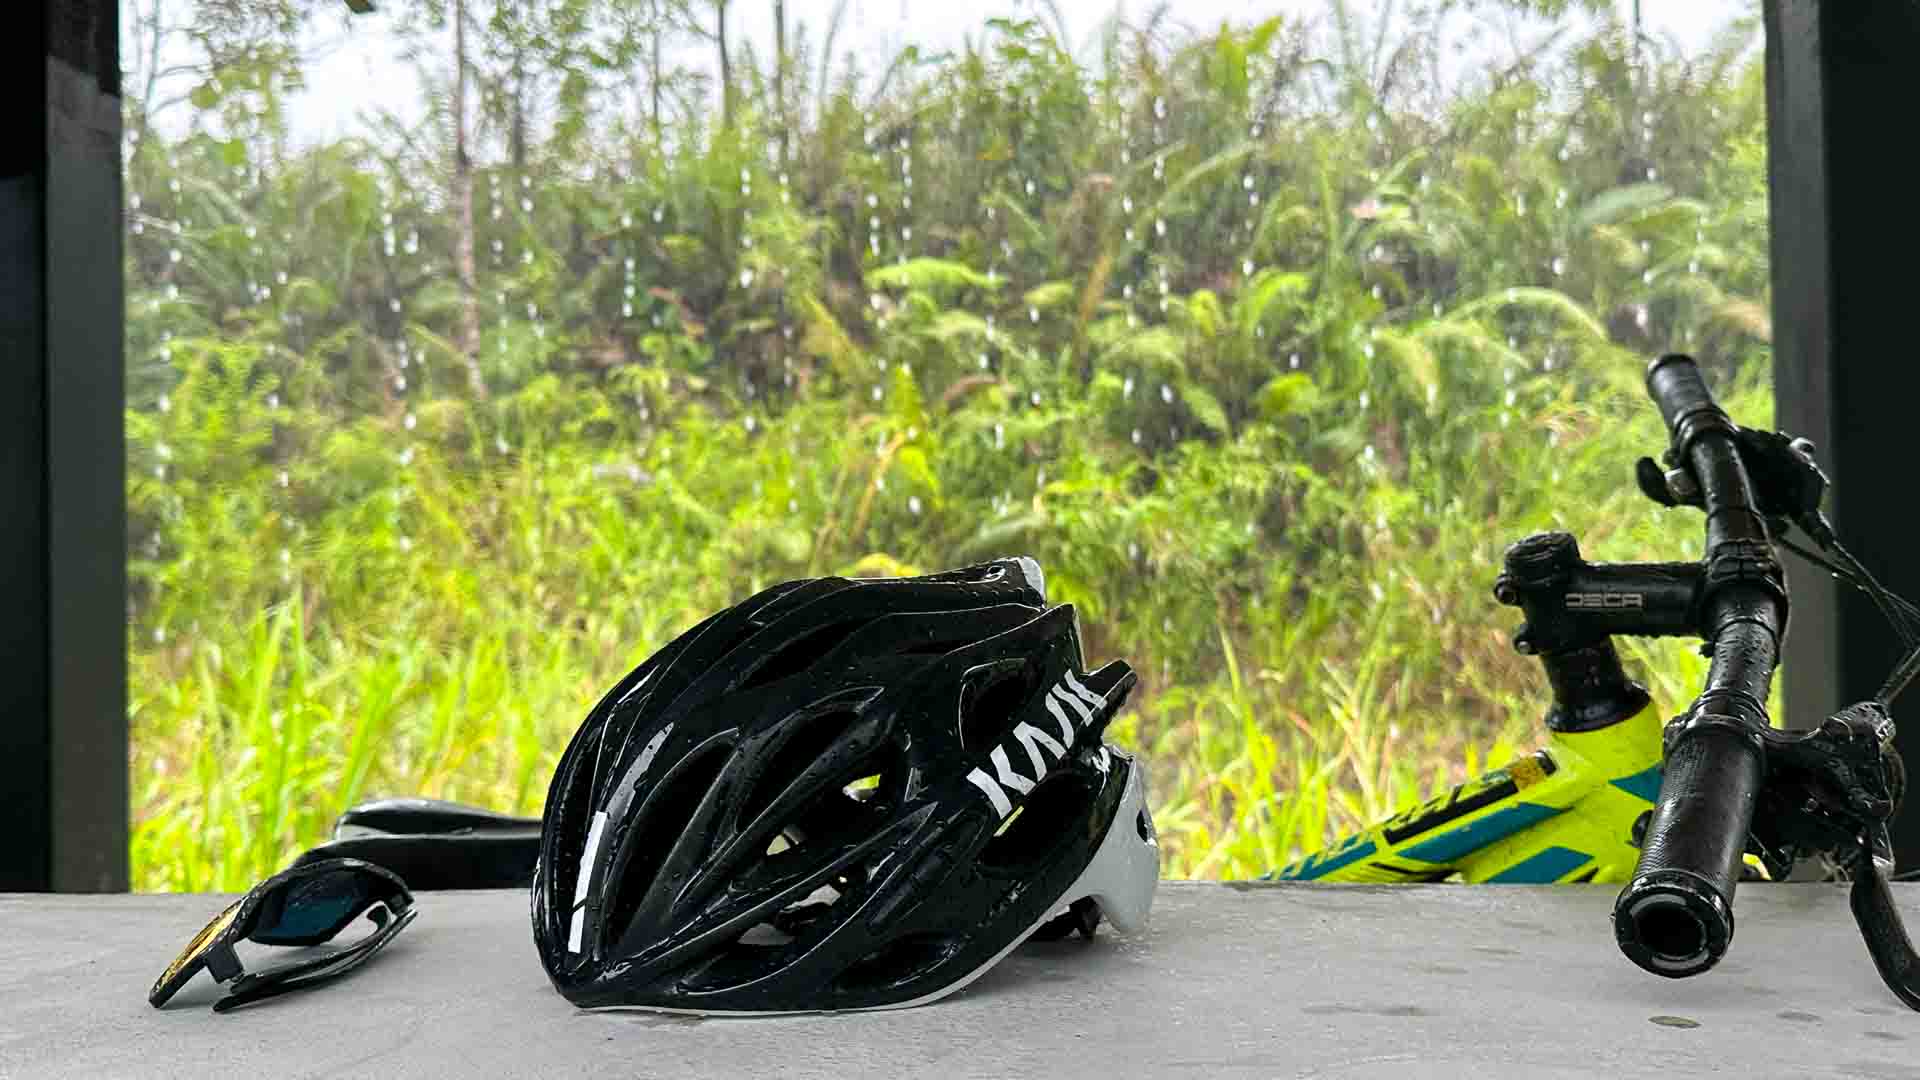 Torrential rain, with helmet and bike in Sarawak Borneo